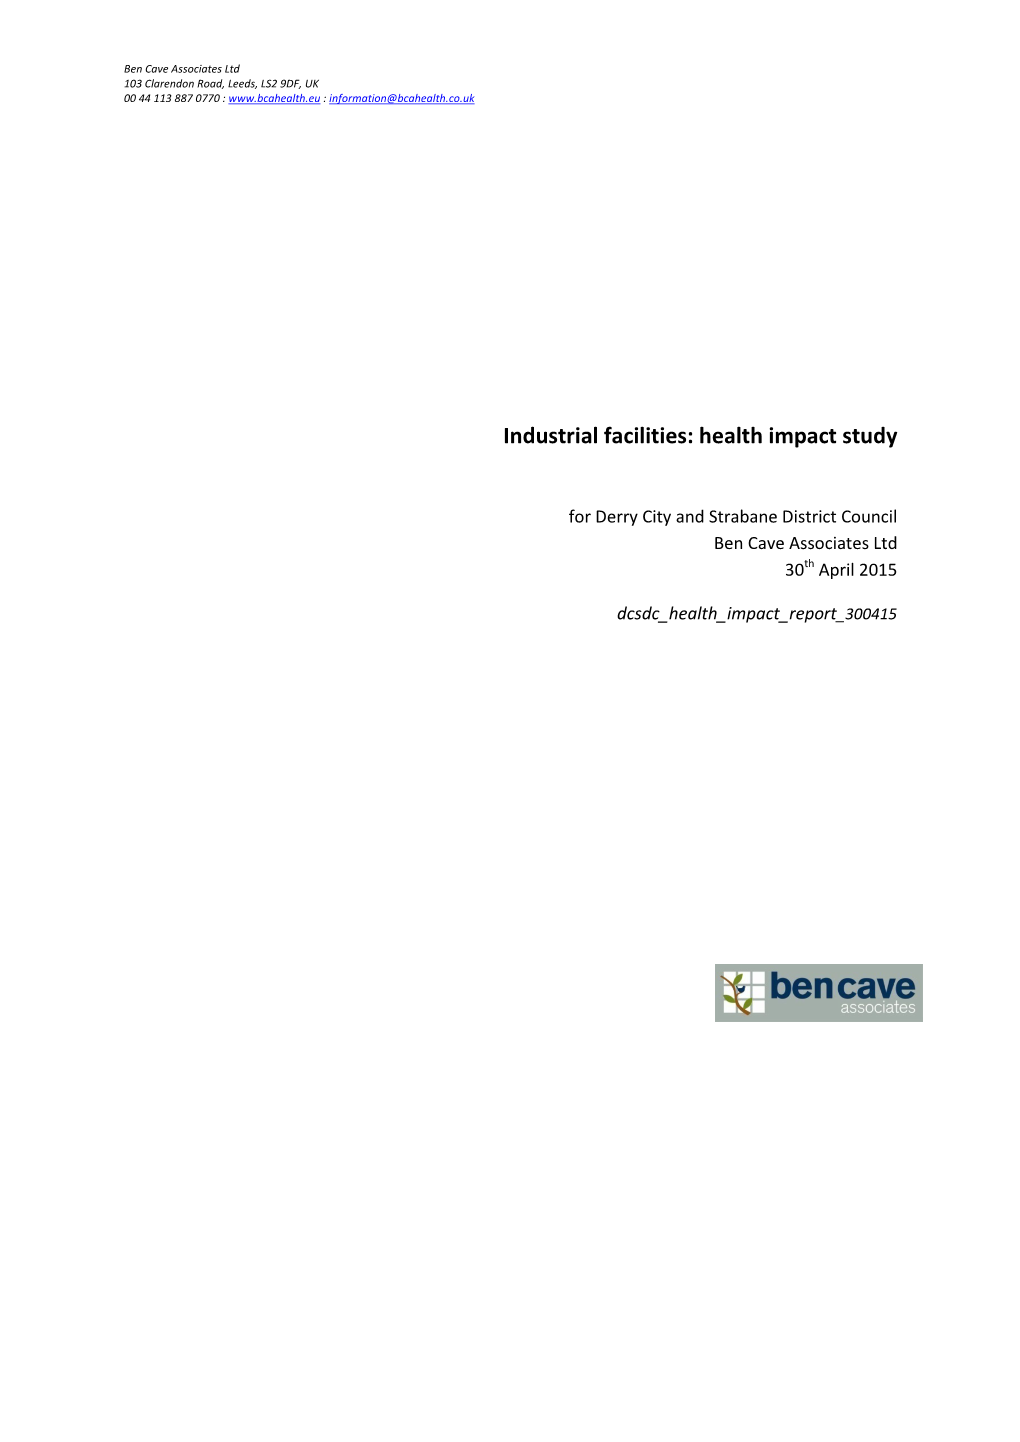 Industrial Facilities: Health Impact Study